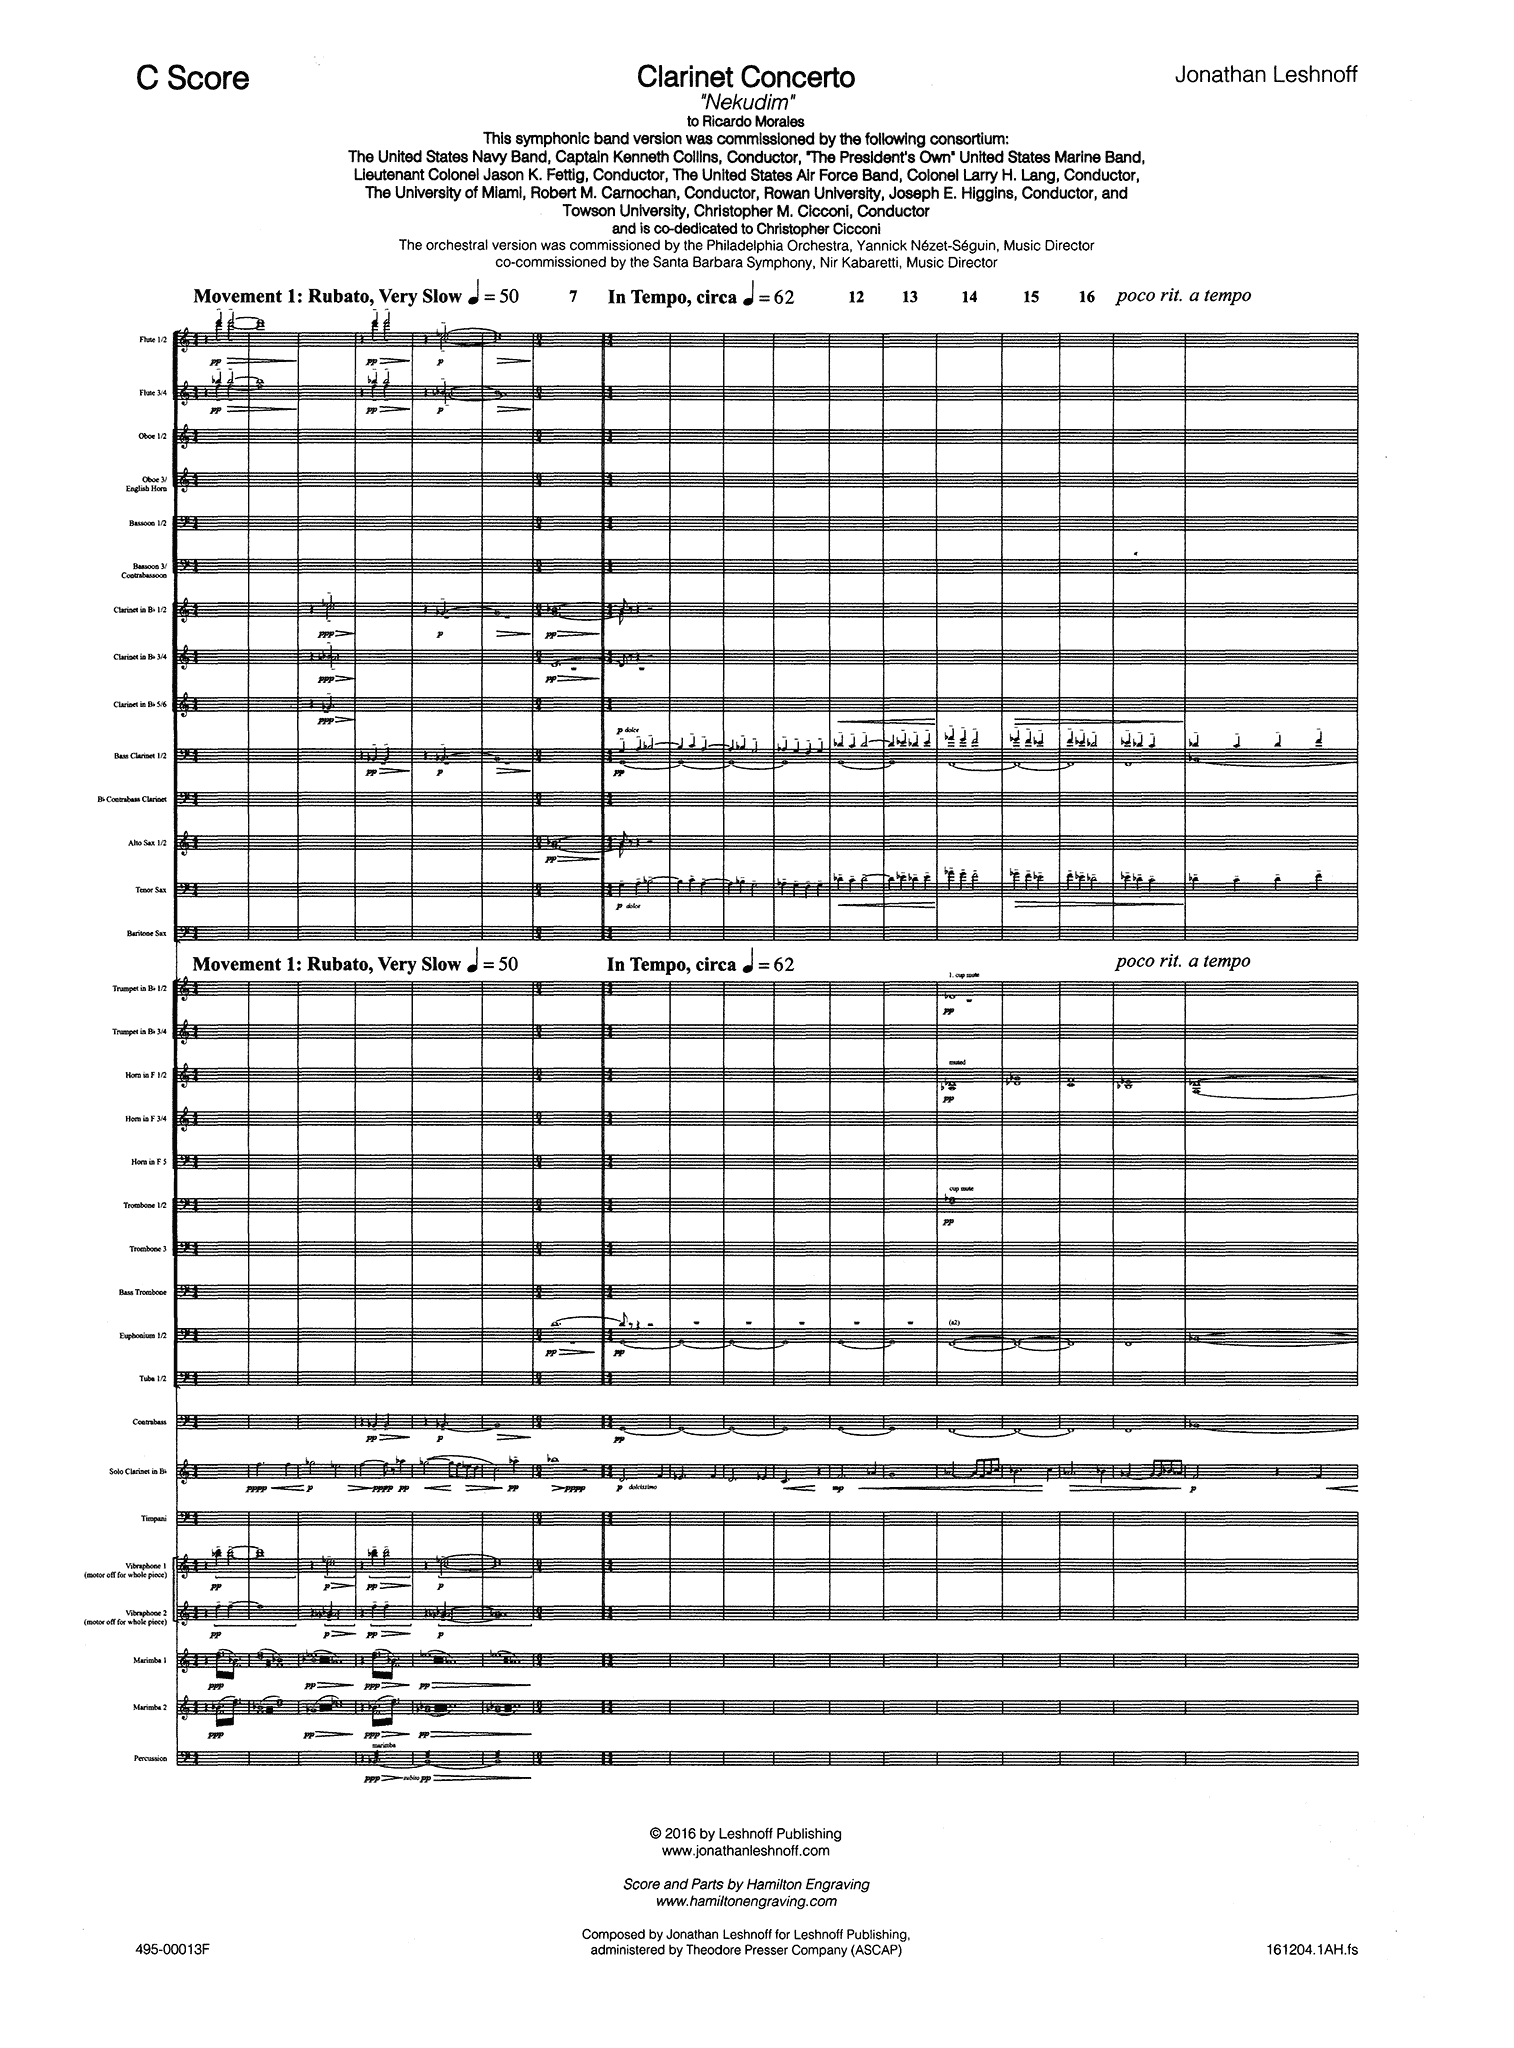 Leshnoff Clarinet Concerto ‘Nekudim’ wind ensemble score - Movement 1